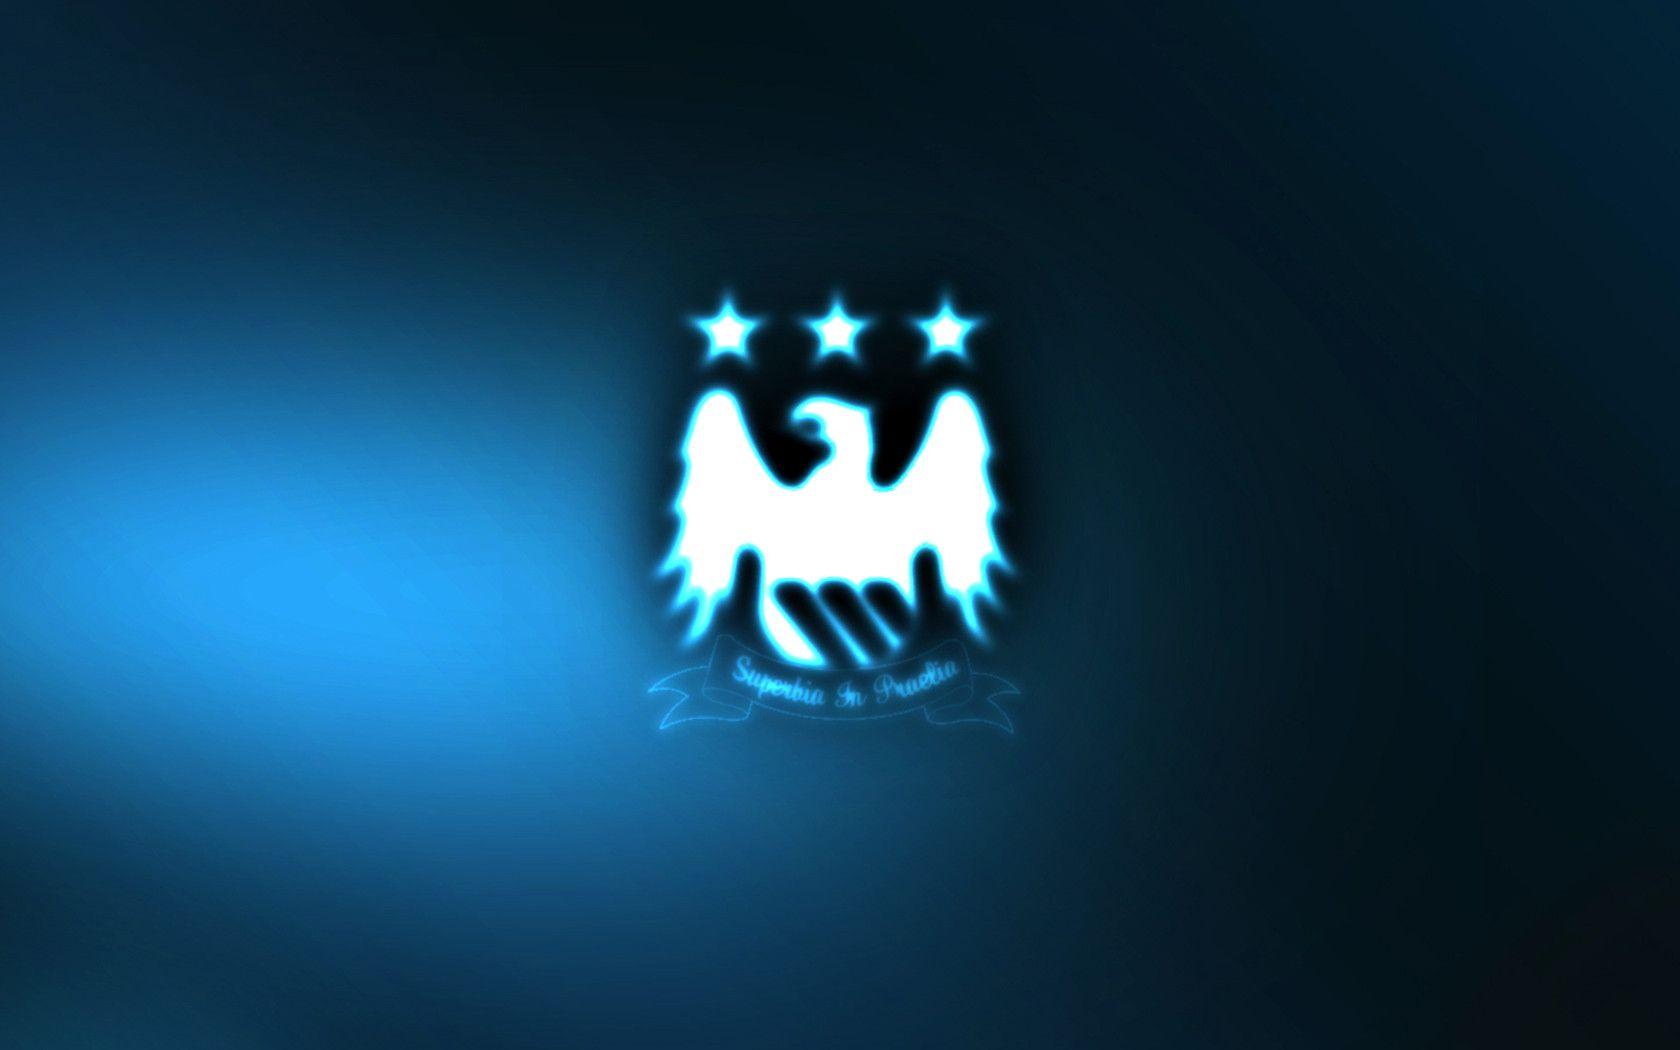 Manchester City wallpaper. Manchester City background